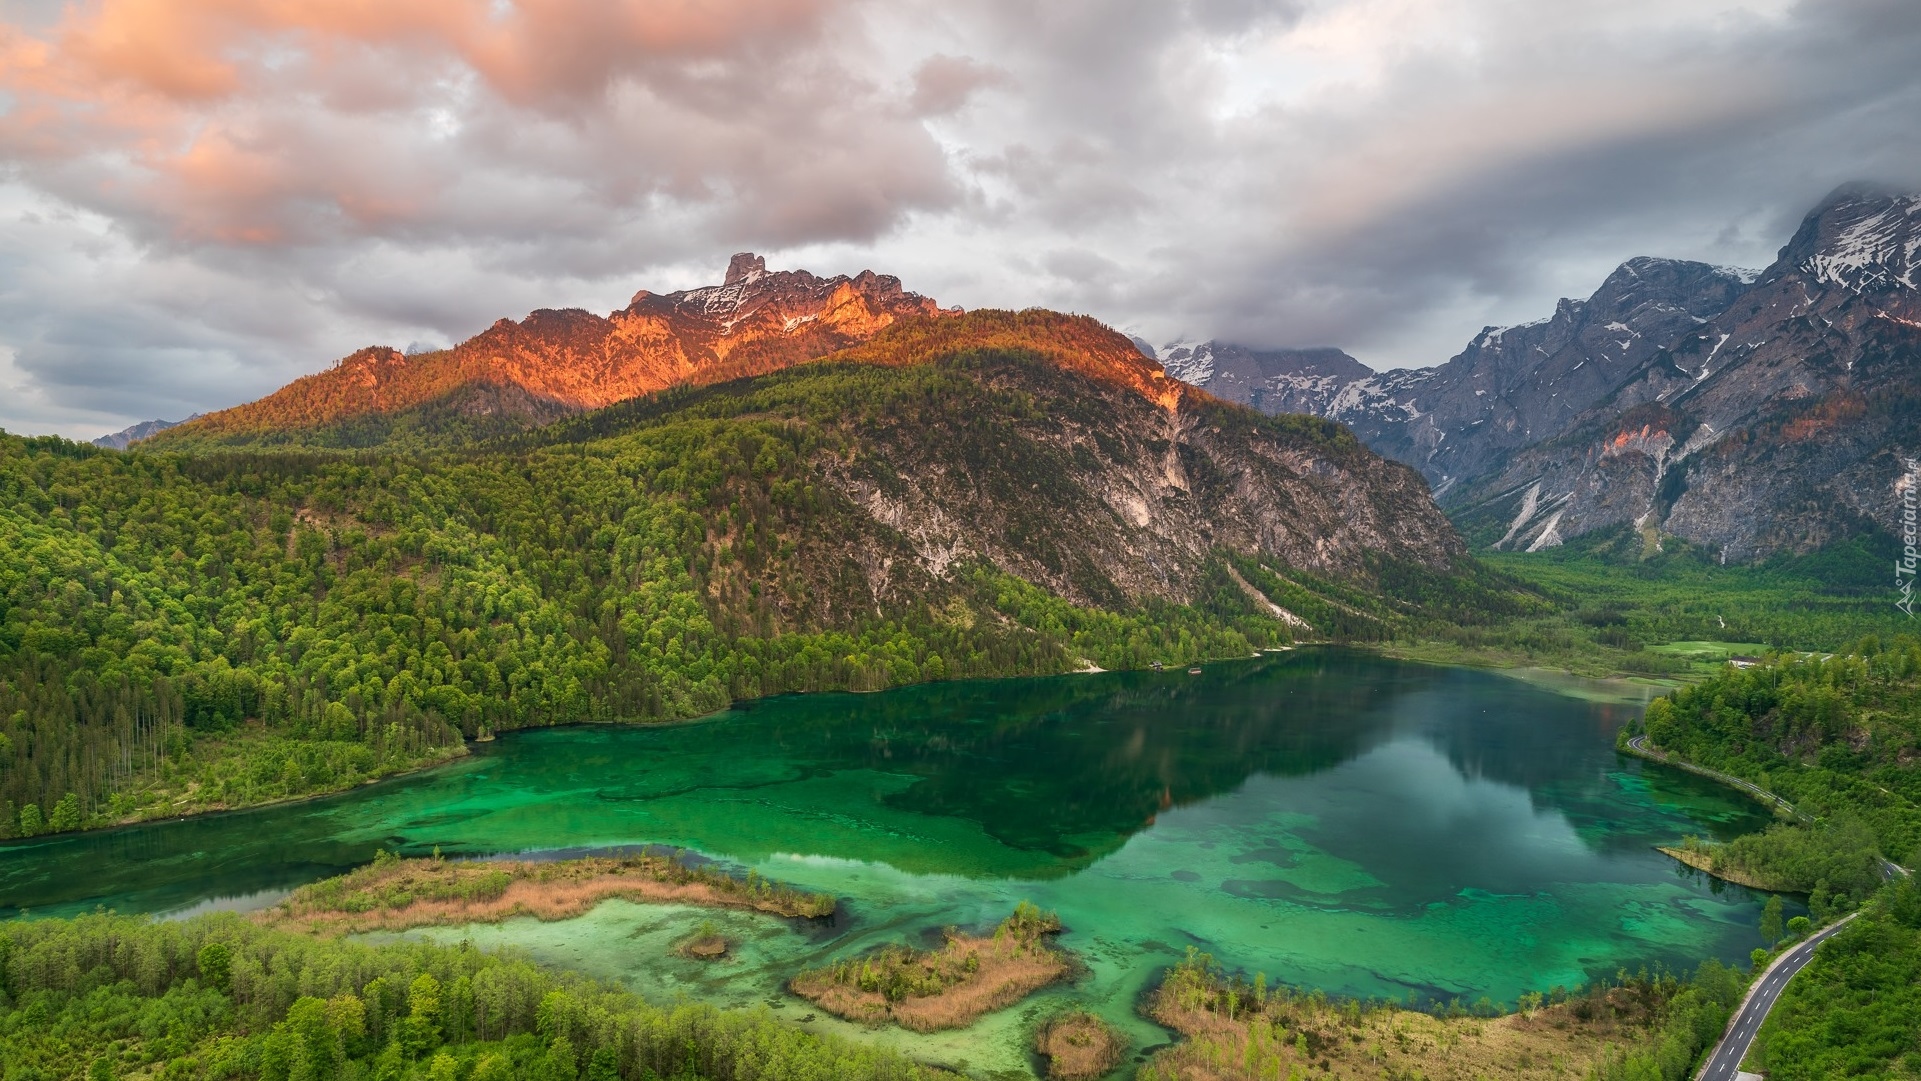 Góry, Jezioro Almsee, Las, Drzewa, Chmury, Austria